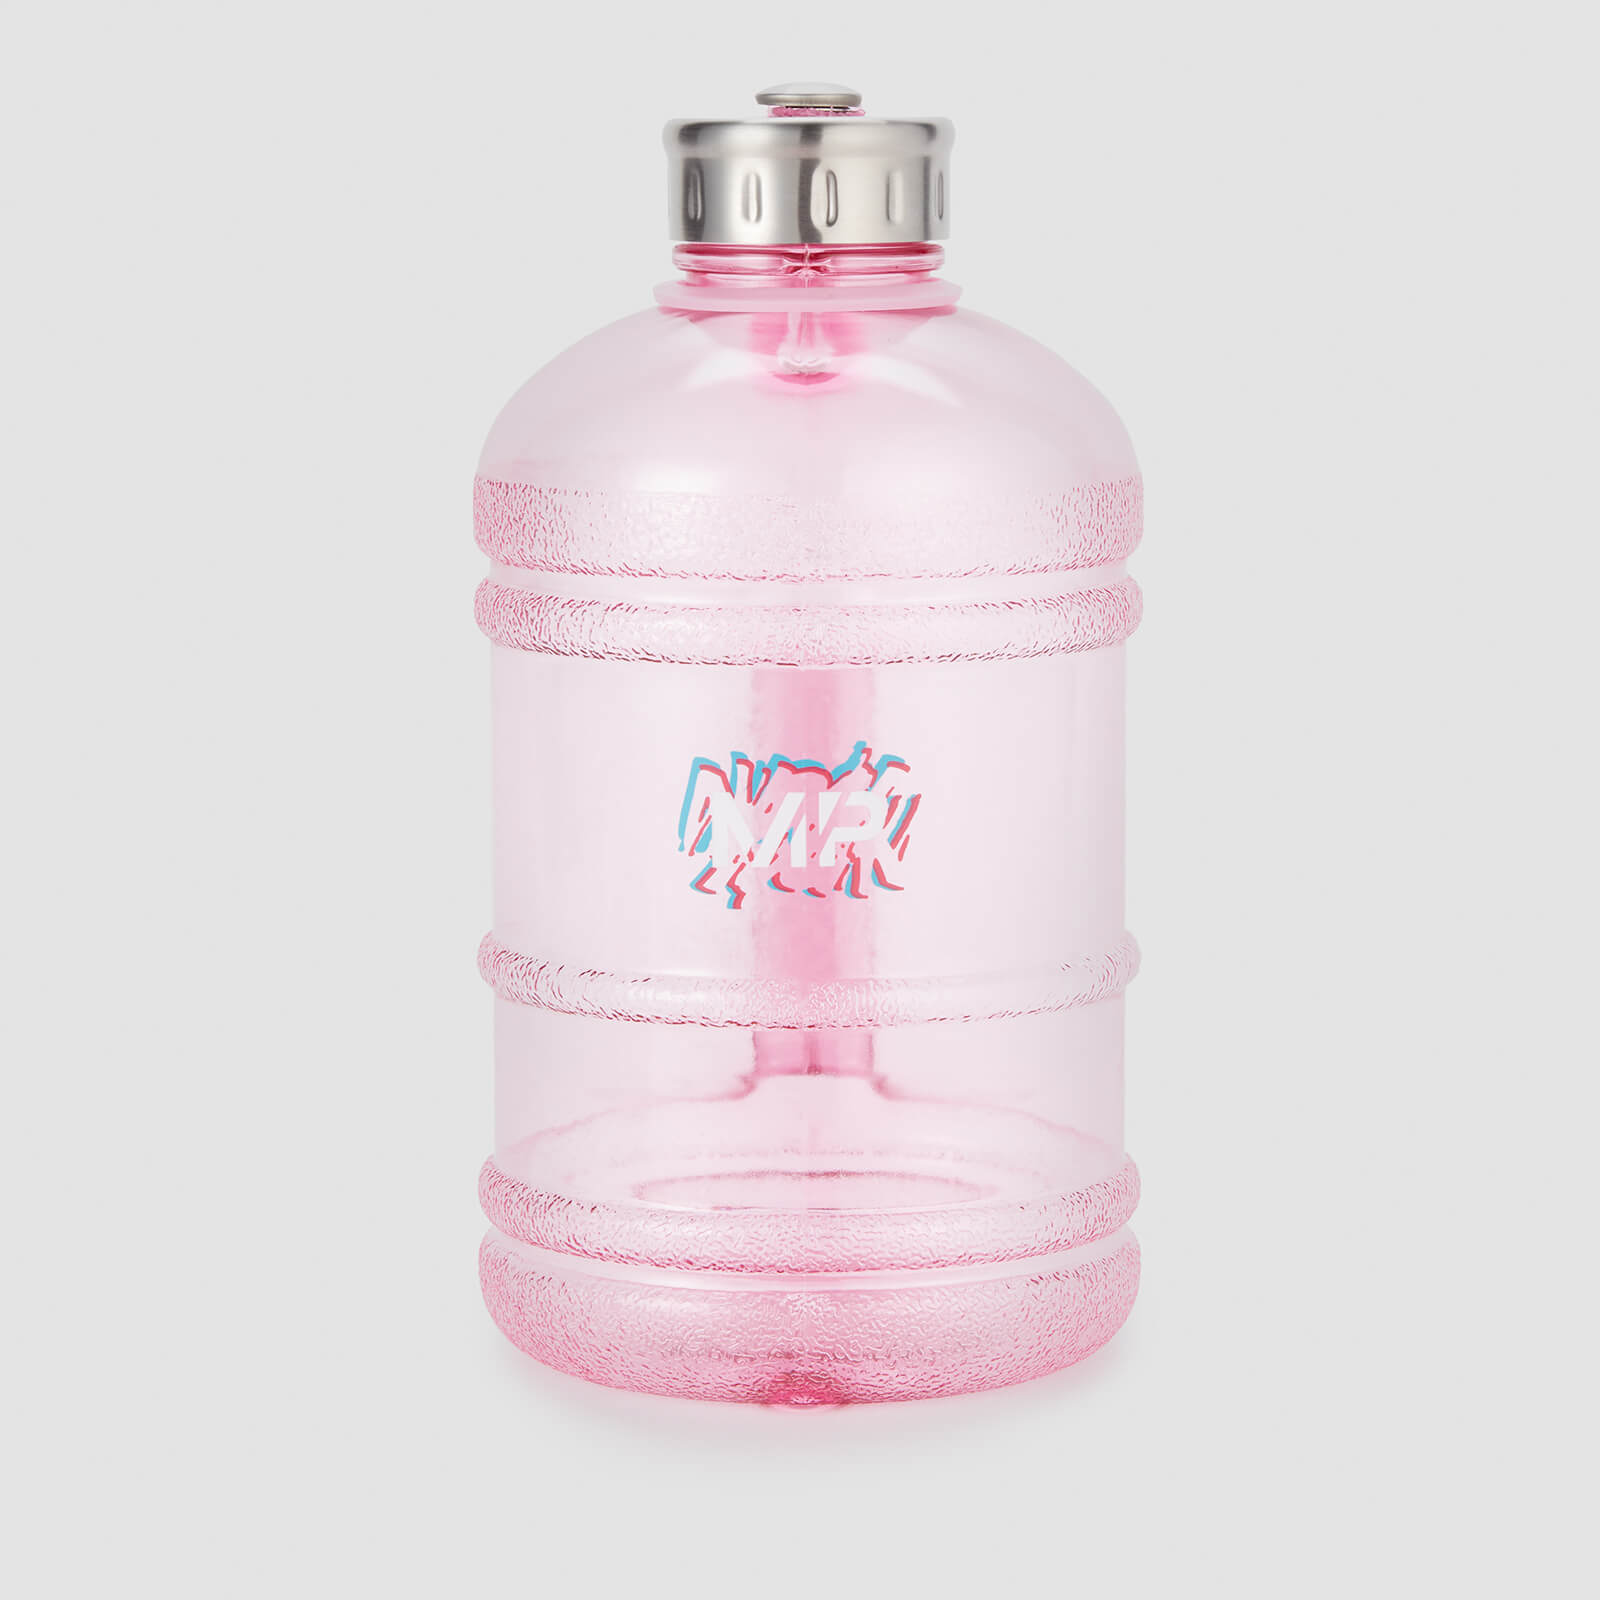 Shaker de 1,9 l da MP - Rosa - 1900 ml